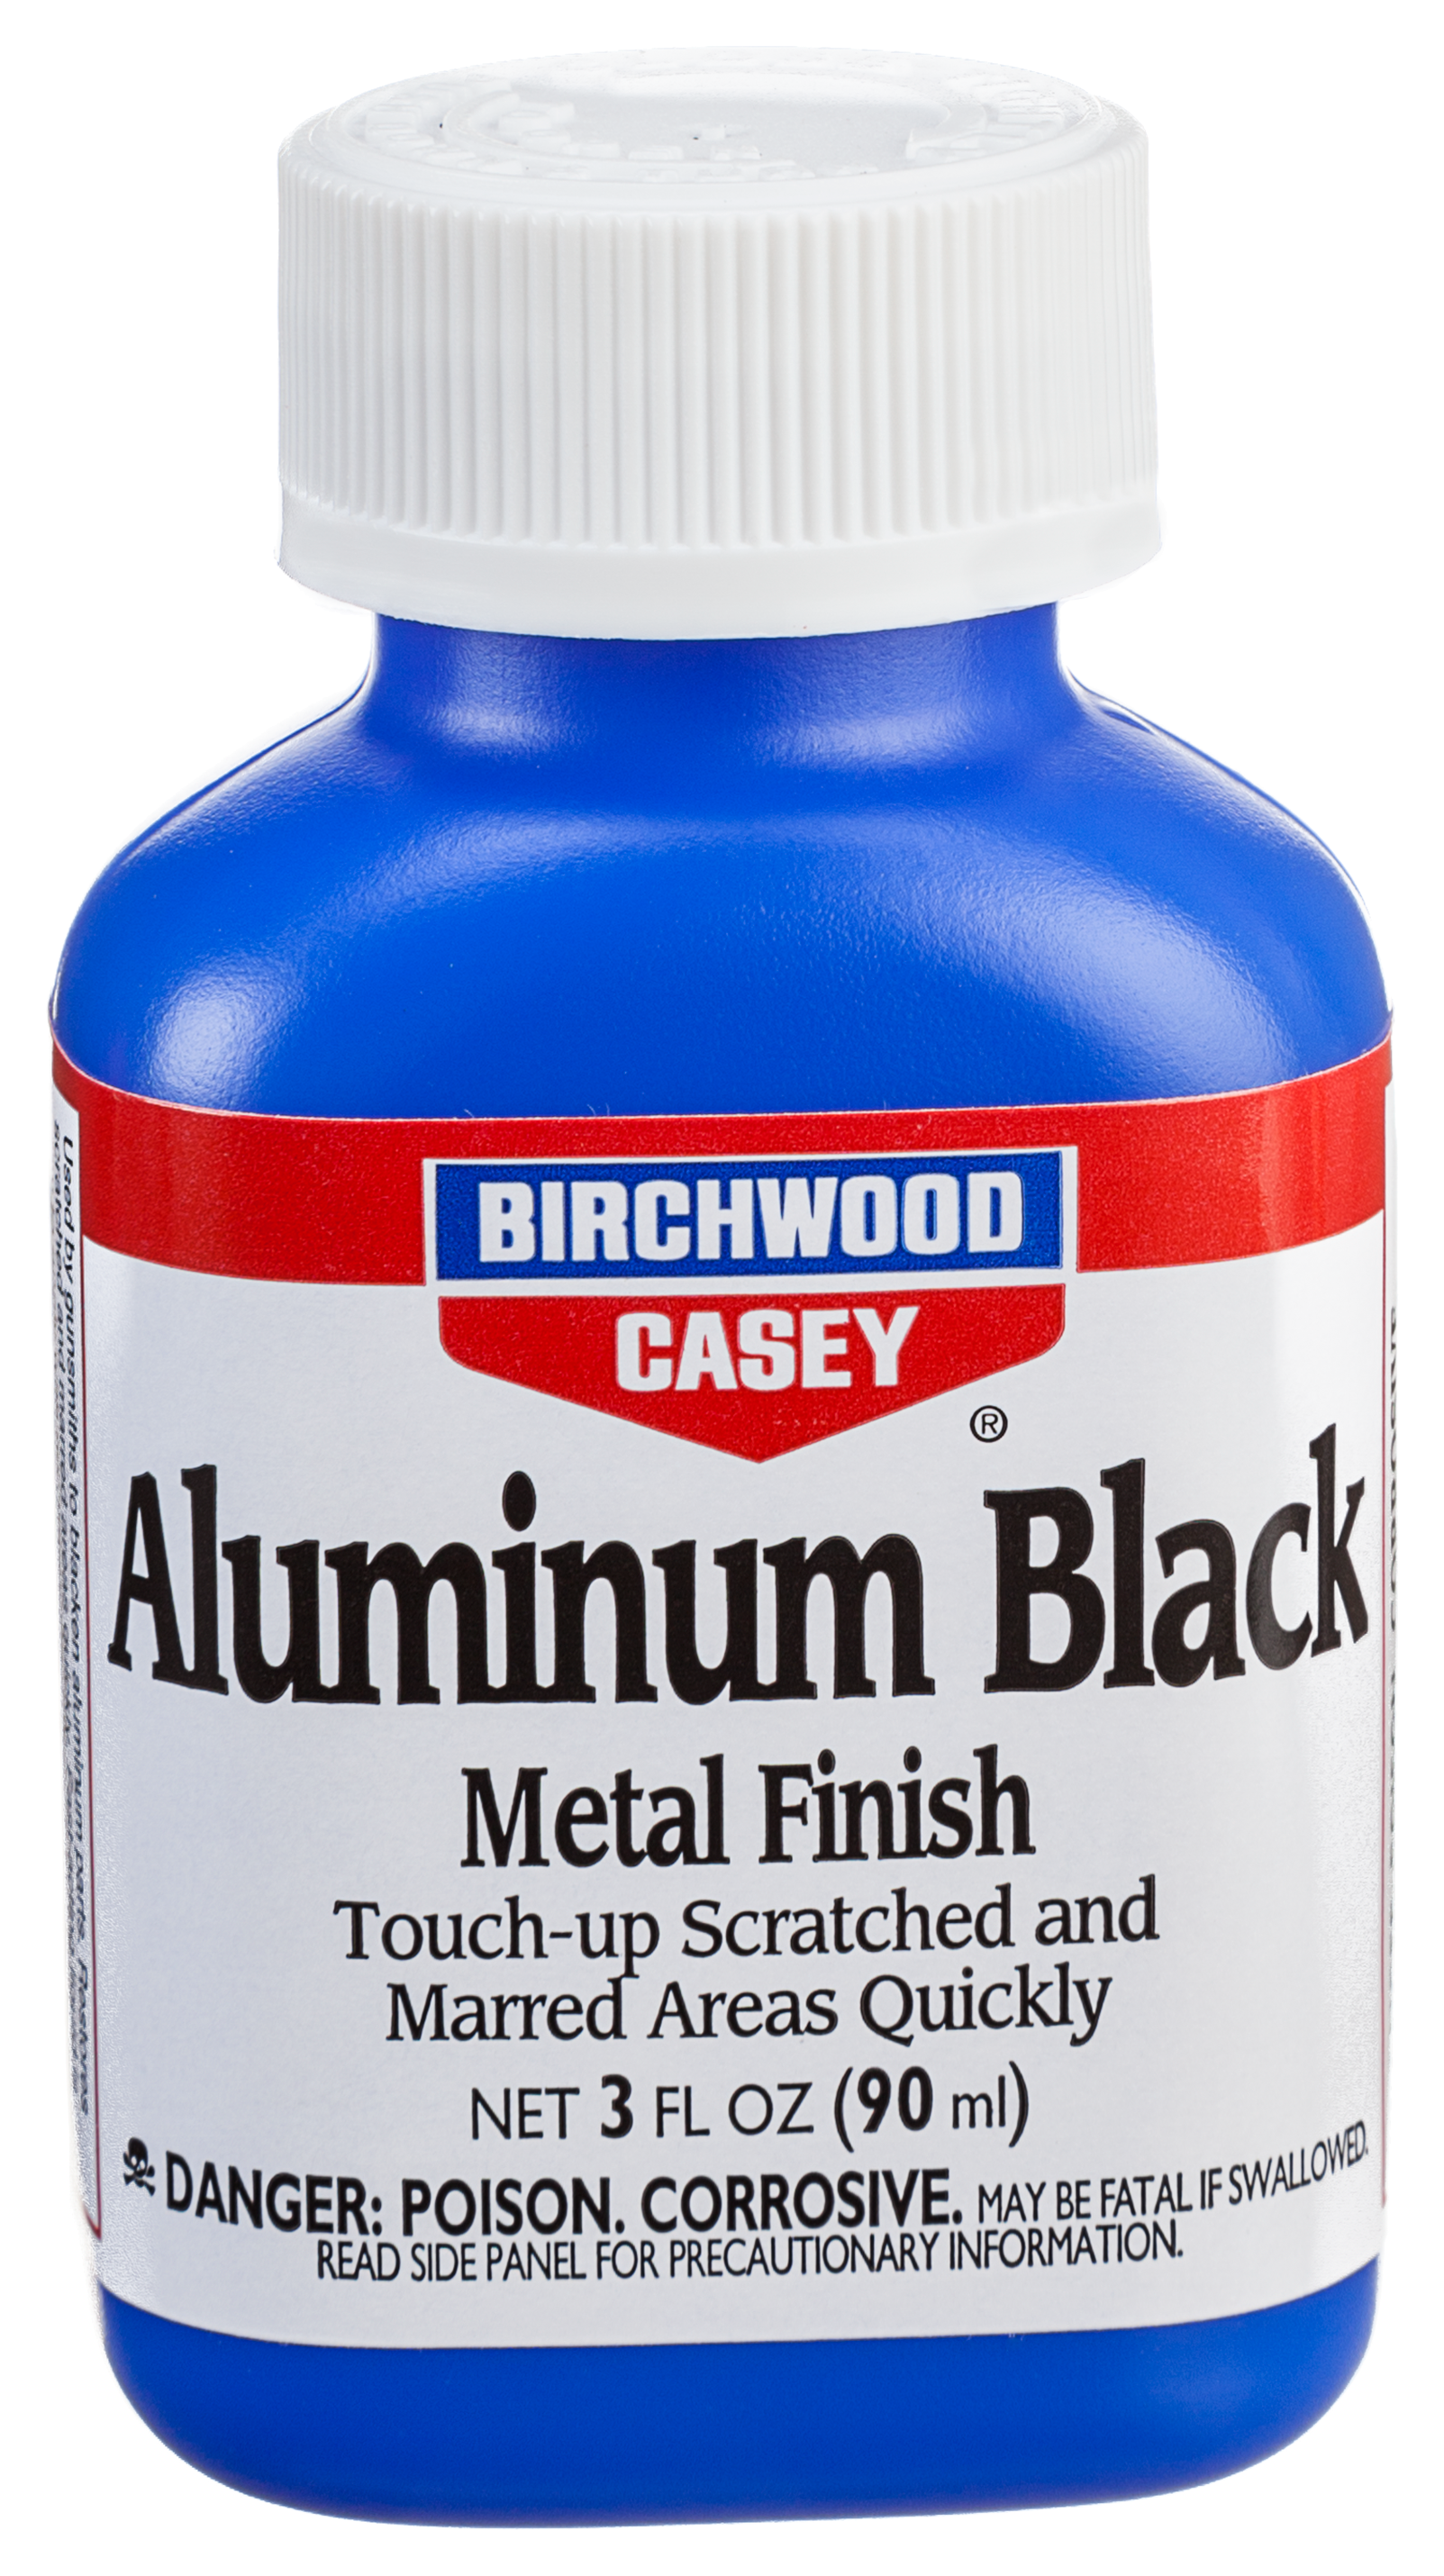 Birchwood Casey Aluminum Black Metal Finish